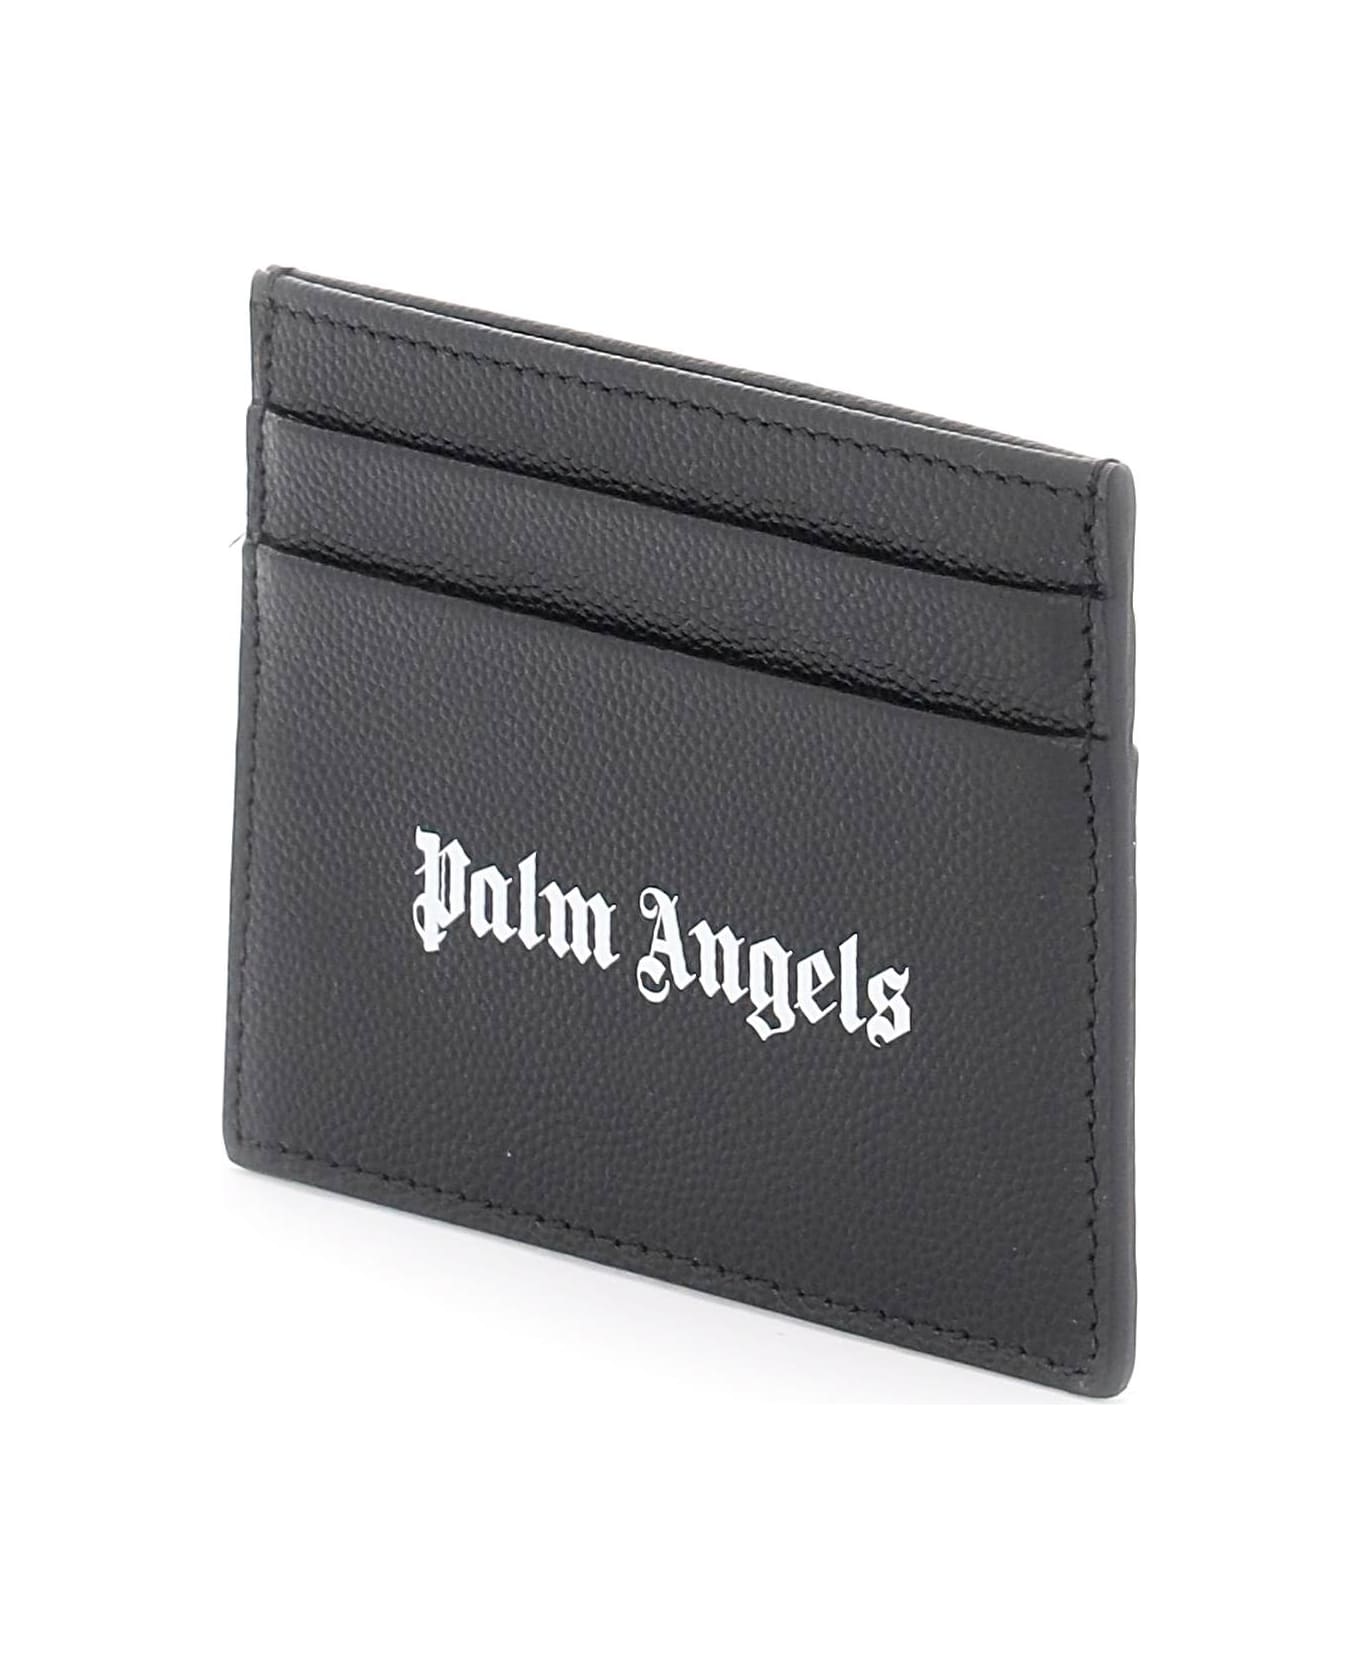 Palm Angels Logo Cardholder - Black White